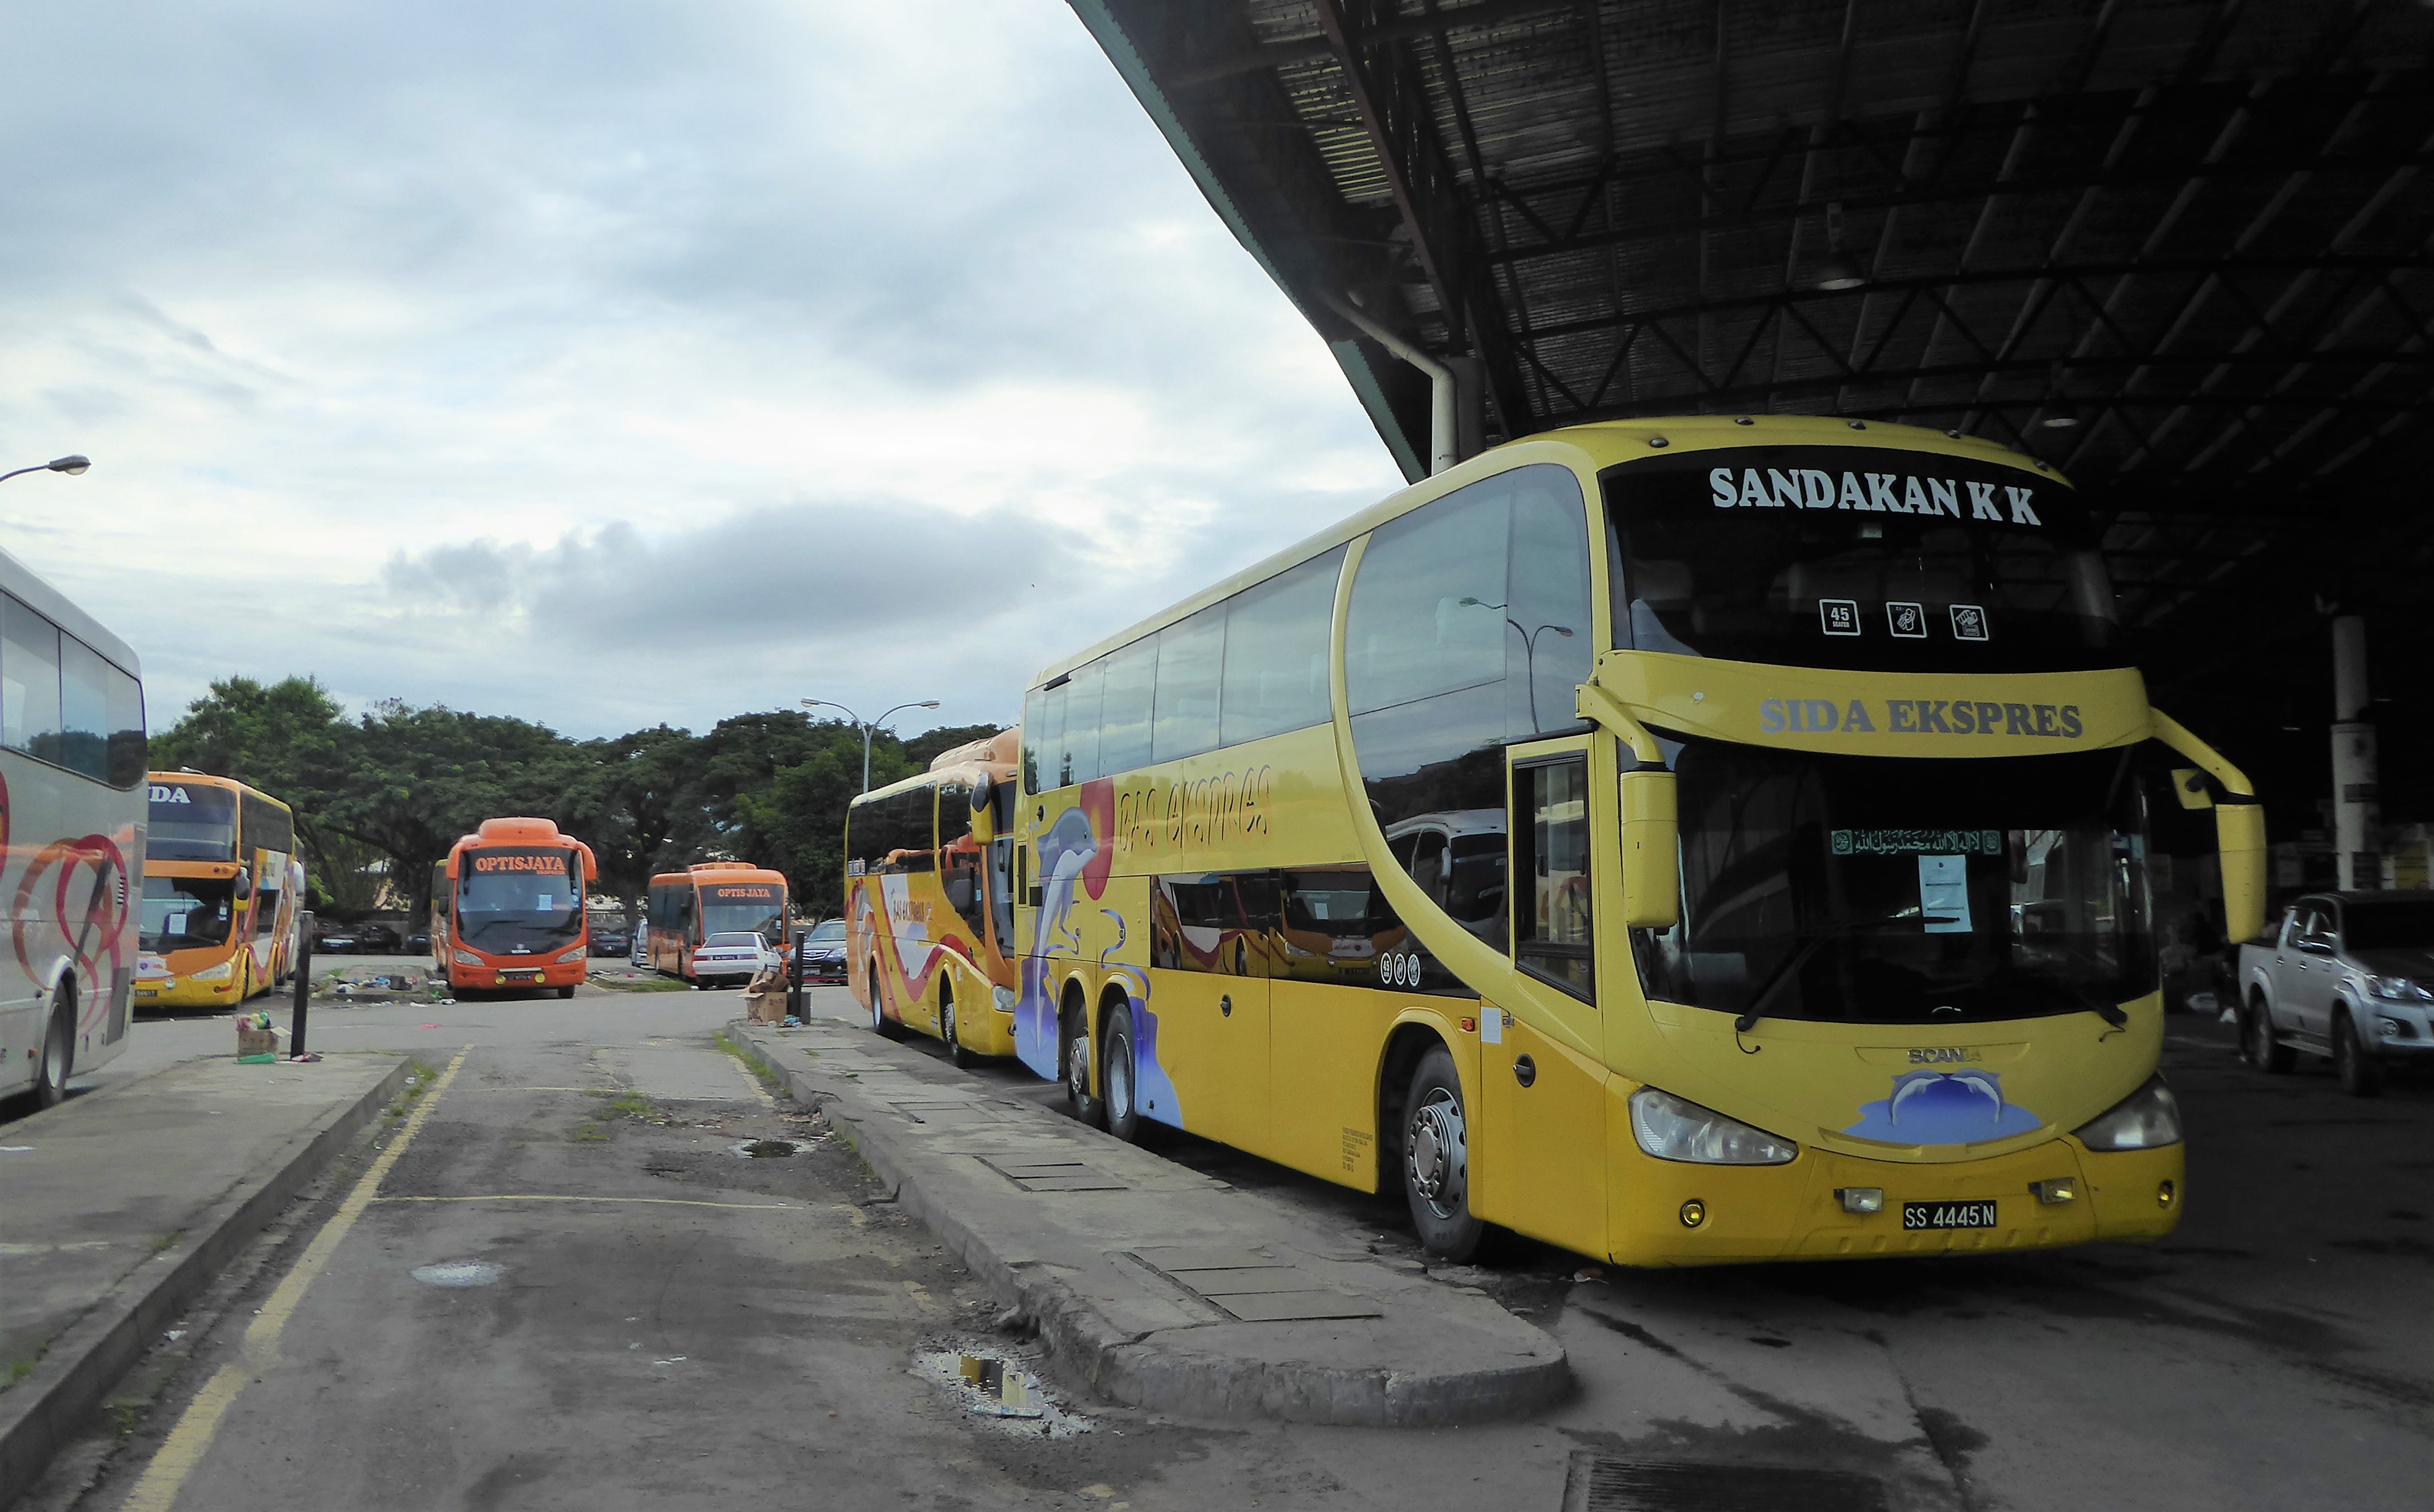 Sandakan Express Bus Terminal - Sandakan, maleisie